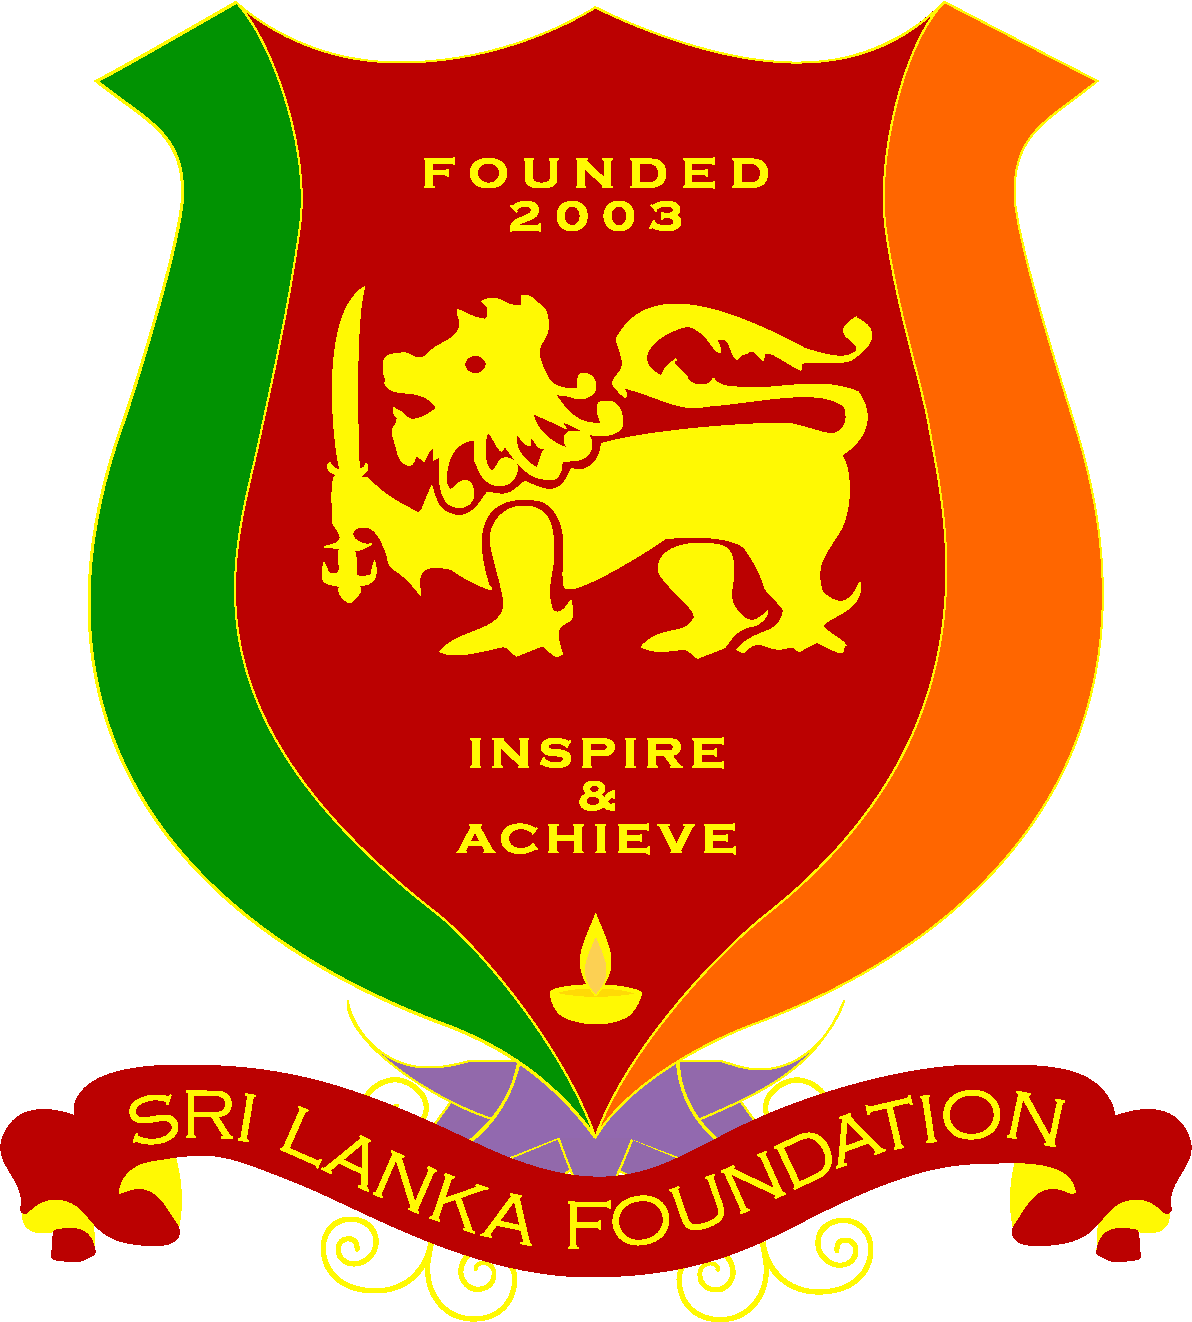 Sri Lanka Day 2012